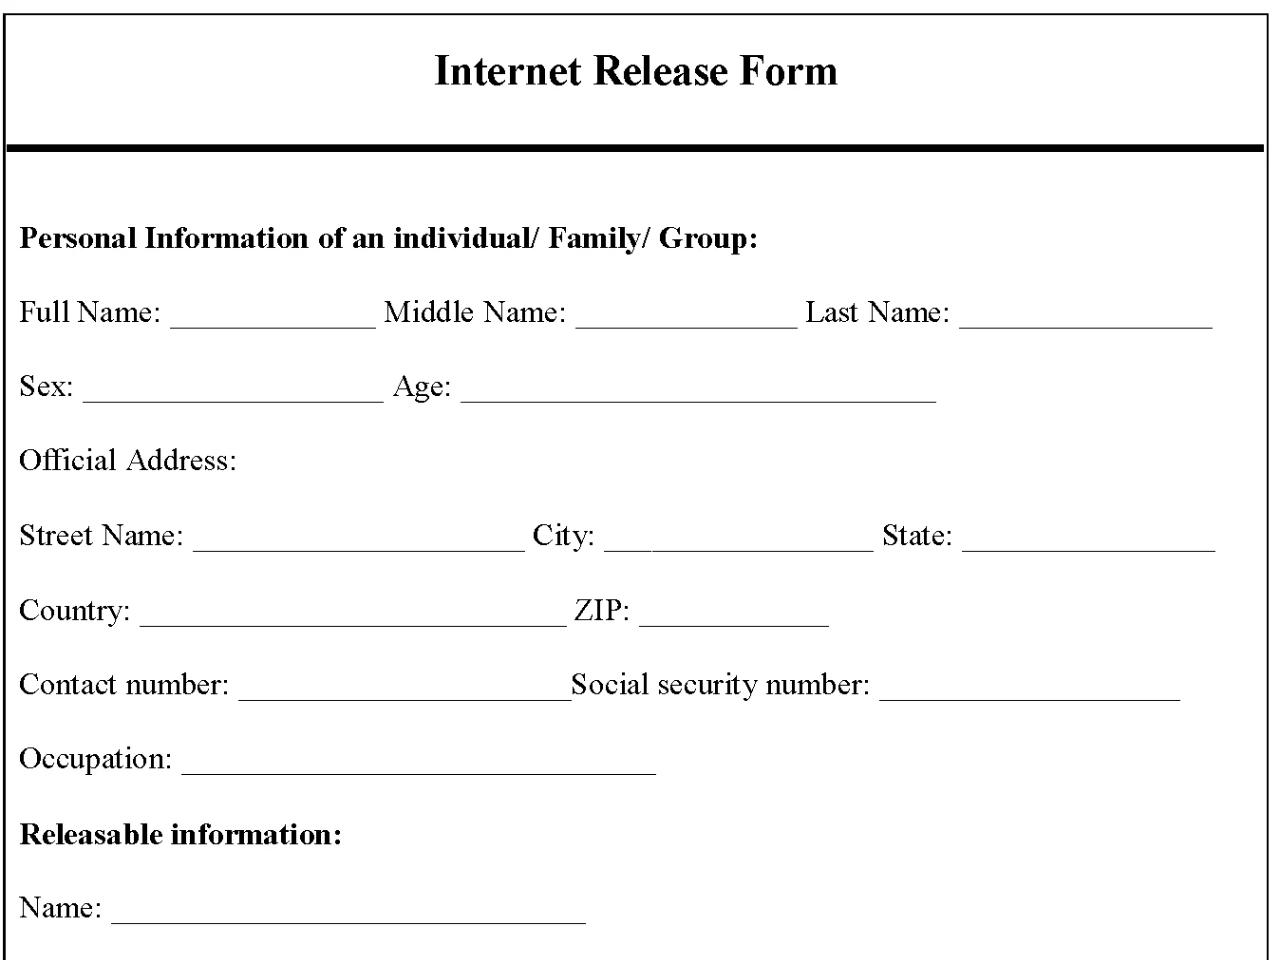 Internet Release Form